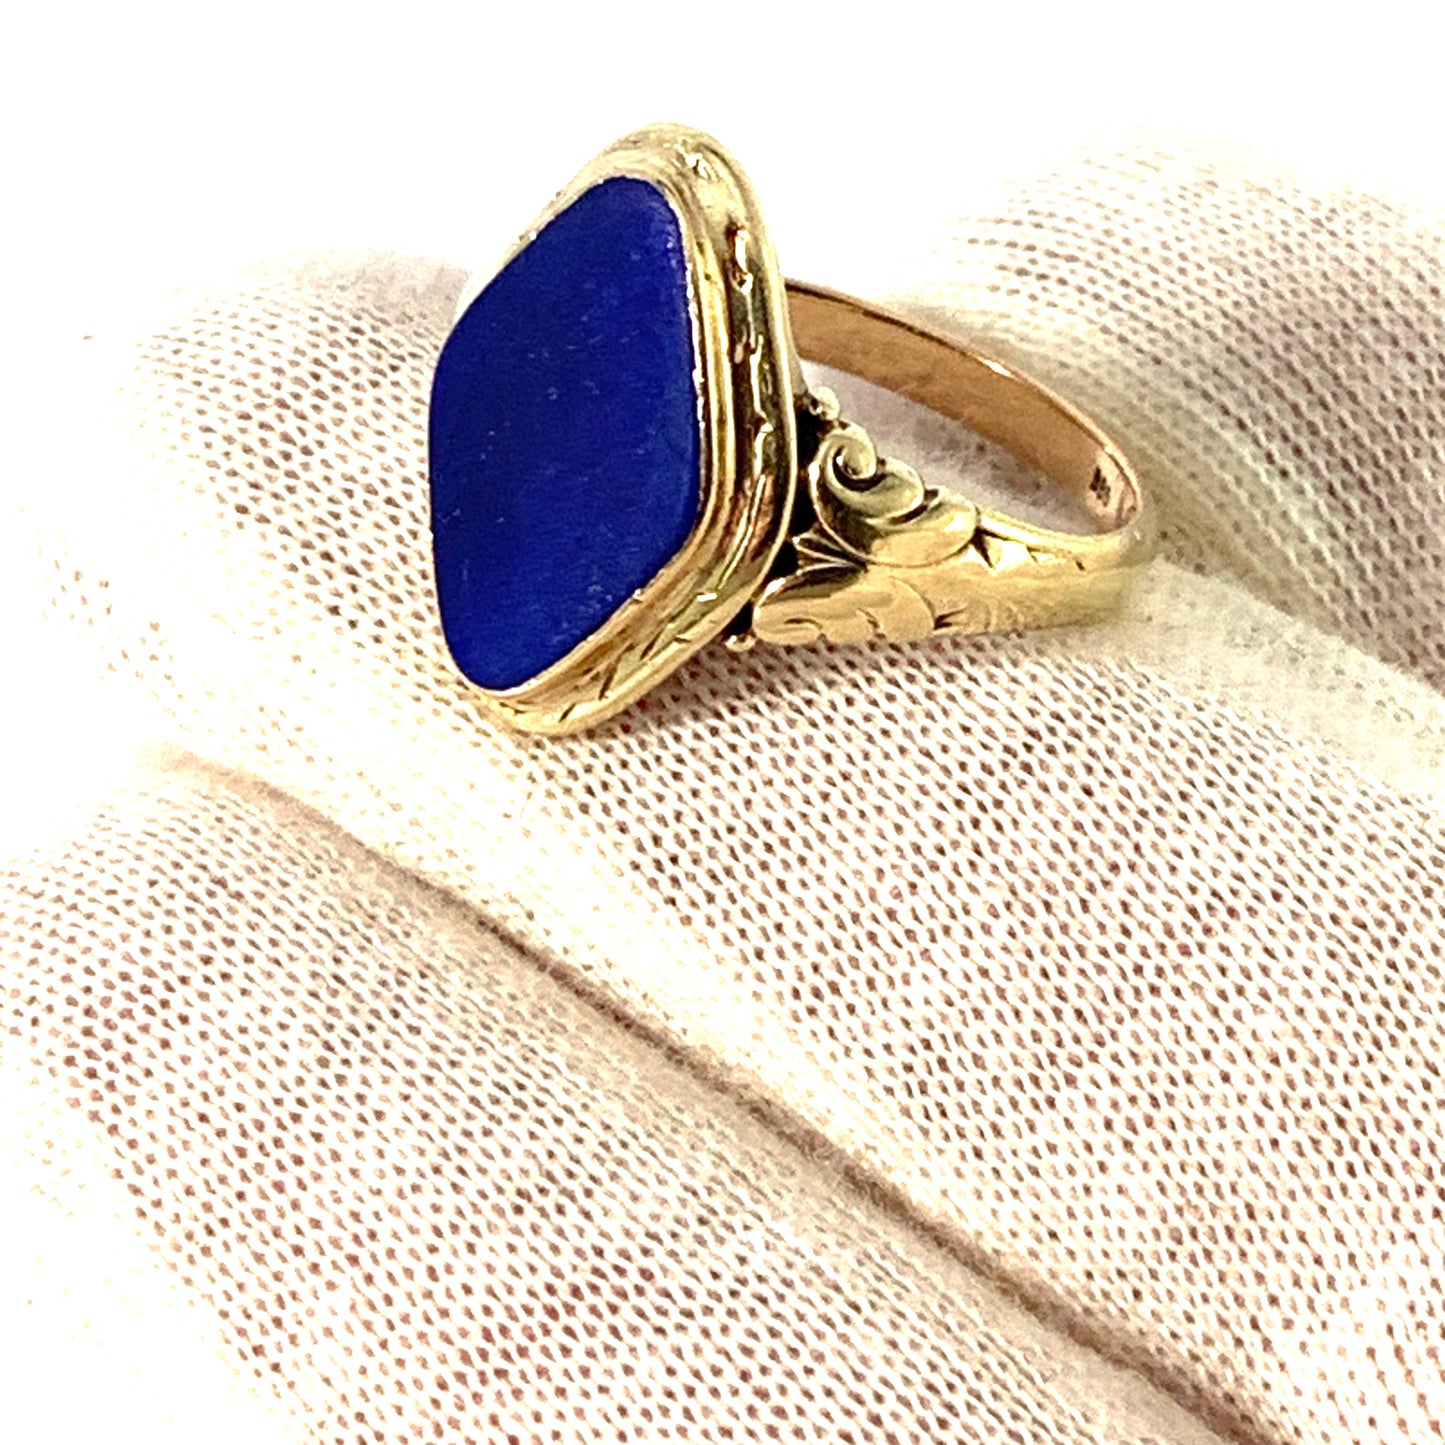 Antique late Victorian 14k Gold Lapis Lazuli Unisex Signet Ring.